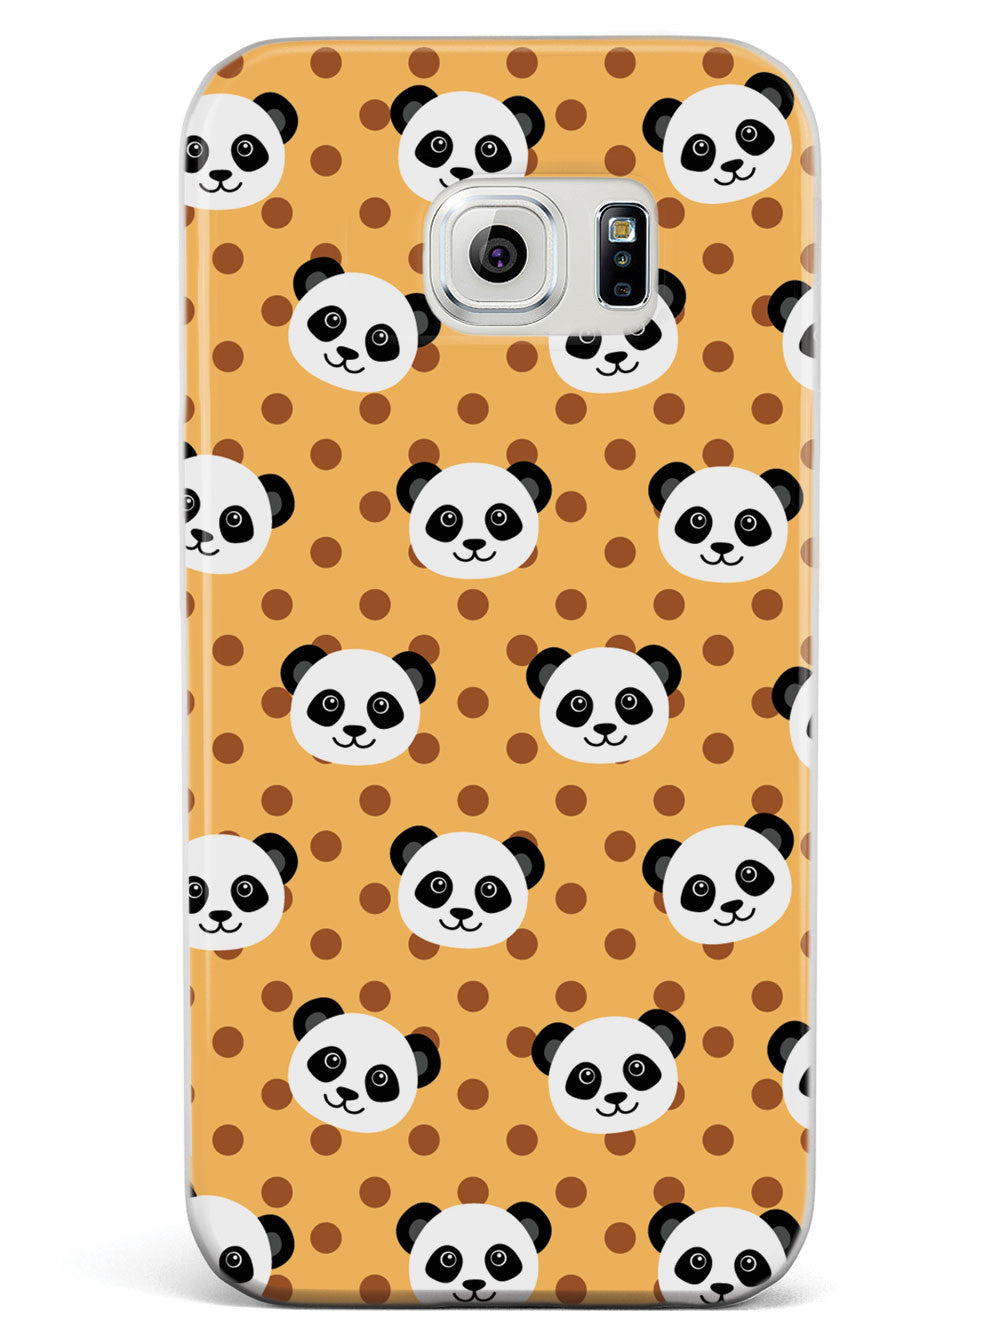 Cute Panda Pattern - Orange Polka Dots Case